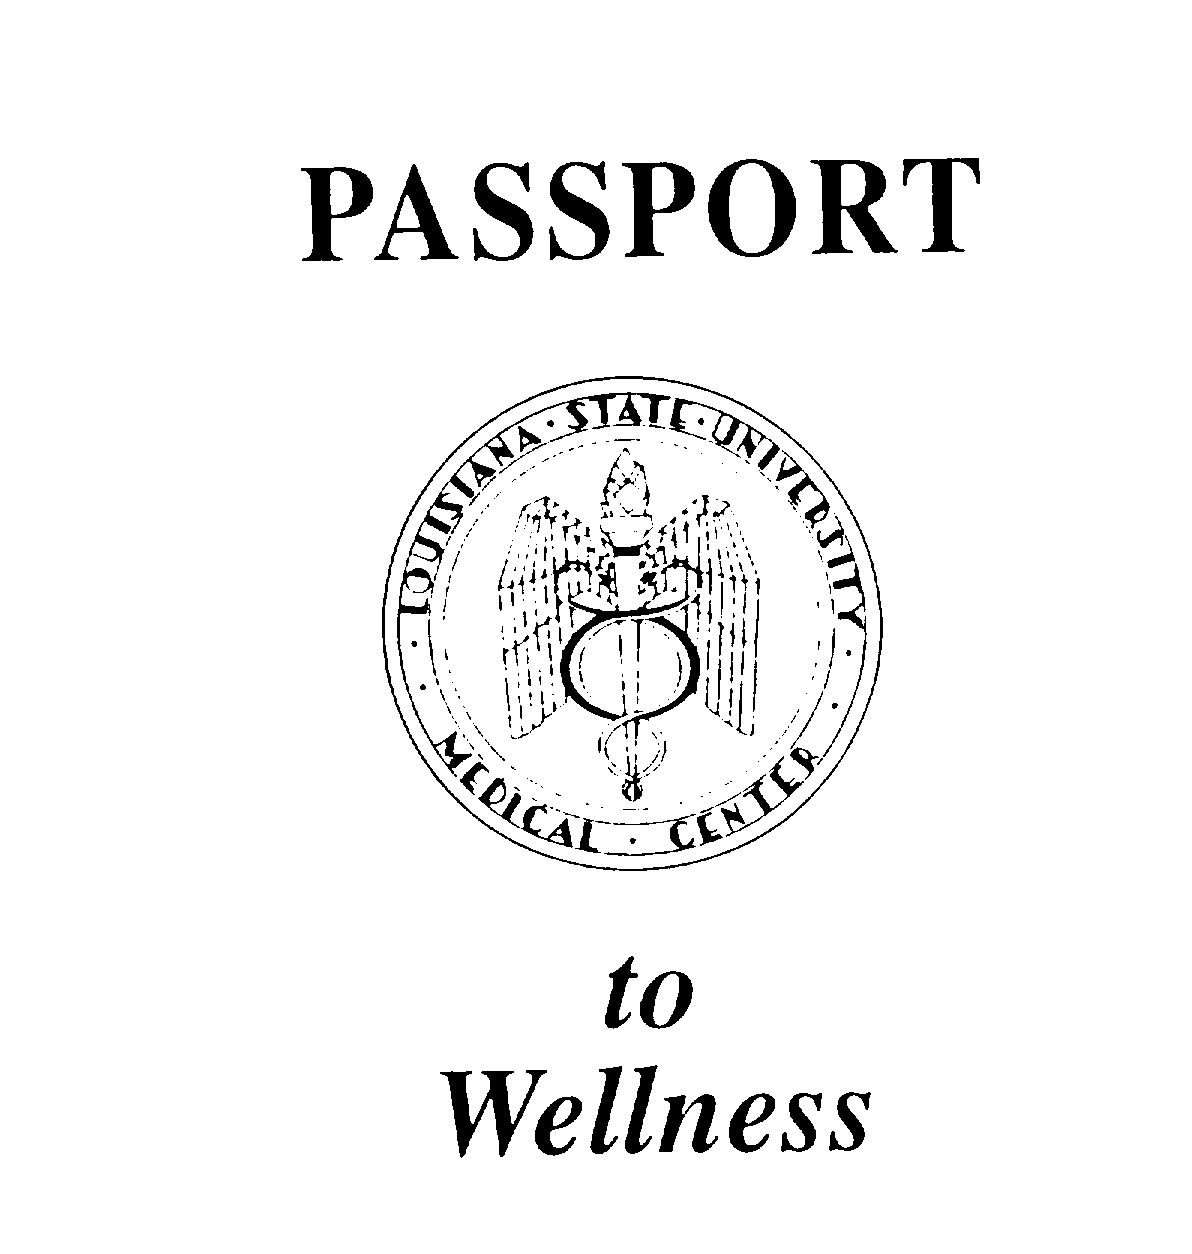  PASSPORT TO WELLNESS LOUISIANA STATE UNIVERSITY MEDICAL CENTER